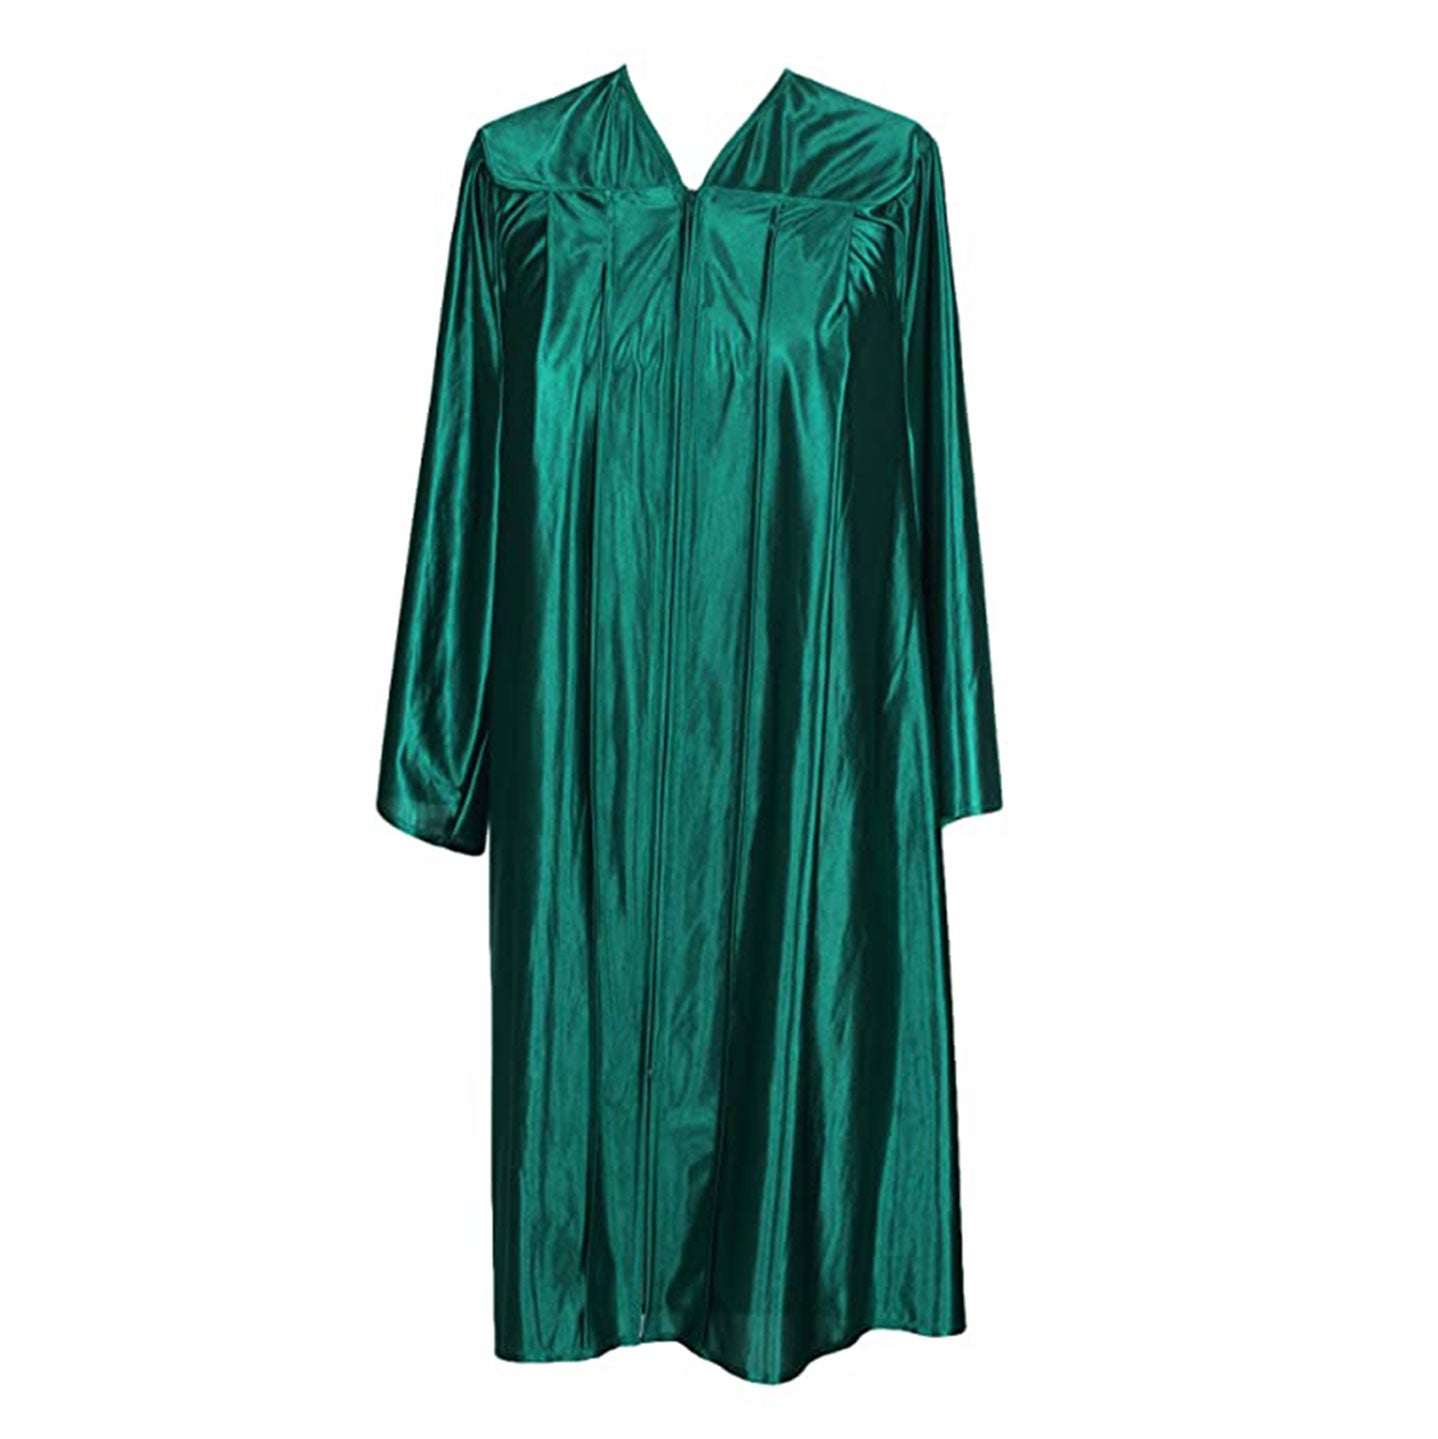 Shiny Hunter Green Choir Gown